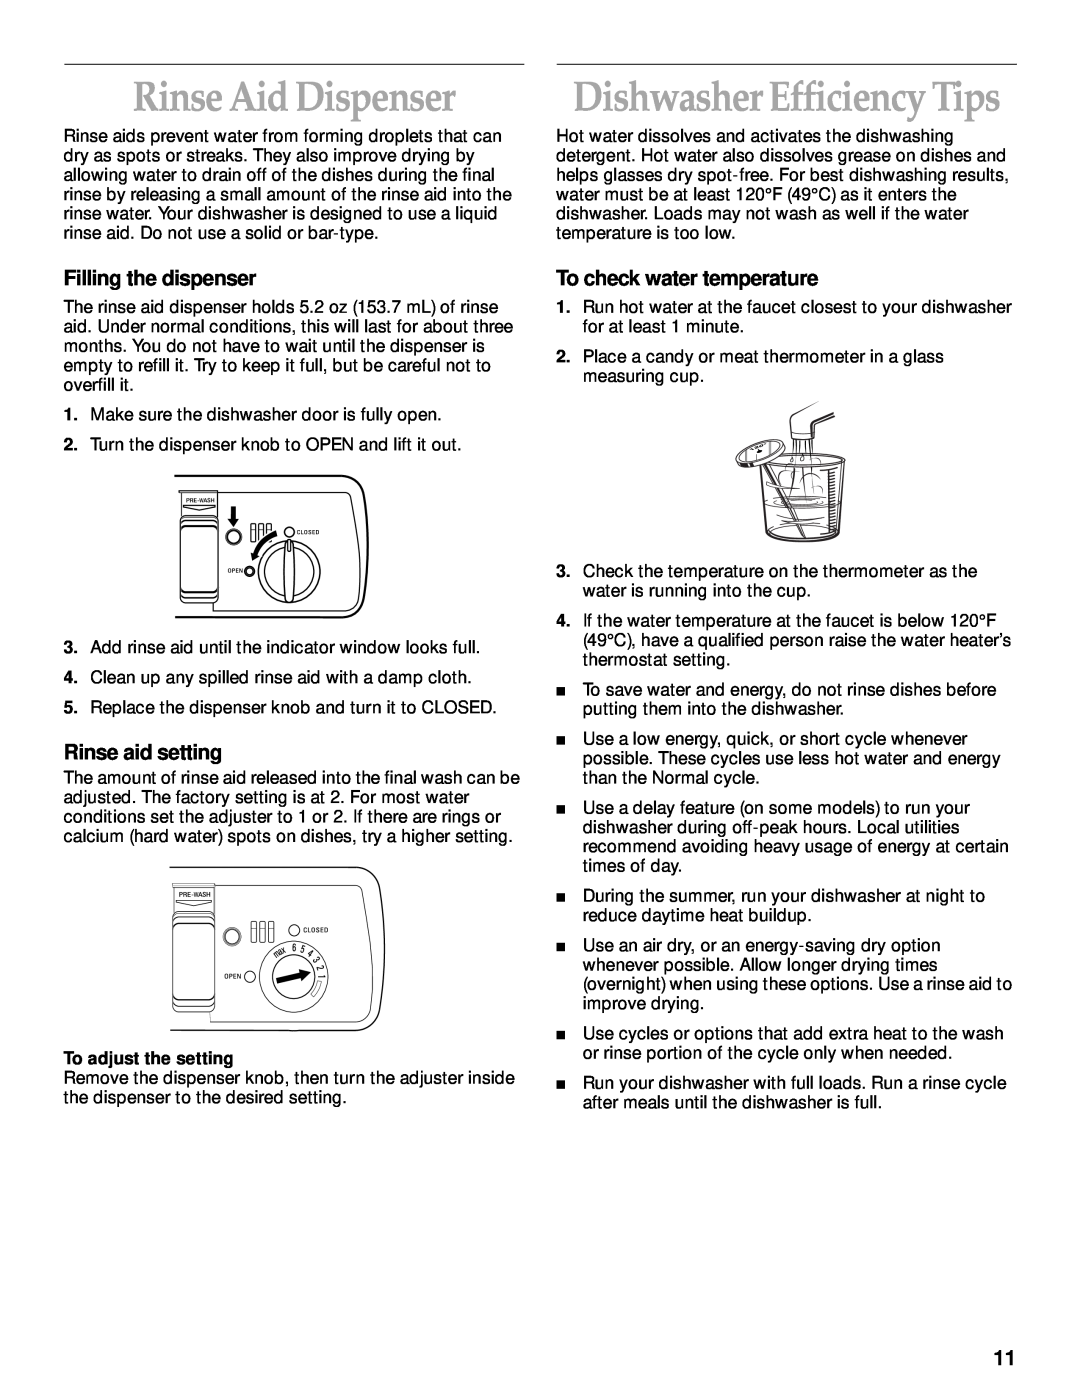 KitchenAid KUDM25SH manual Rinse Aid Dispenser, Dishwasher Efficiency Tips, Rinse aid setting, To check water temperature 